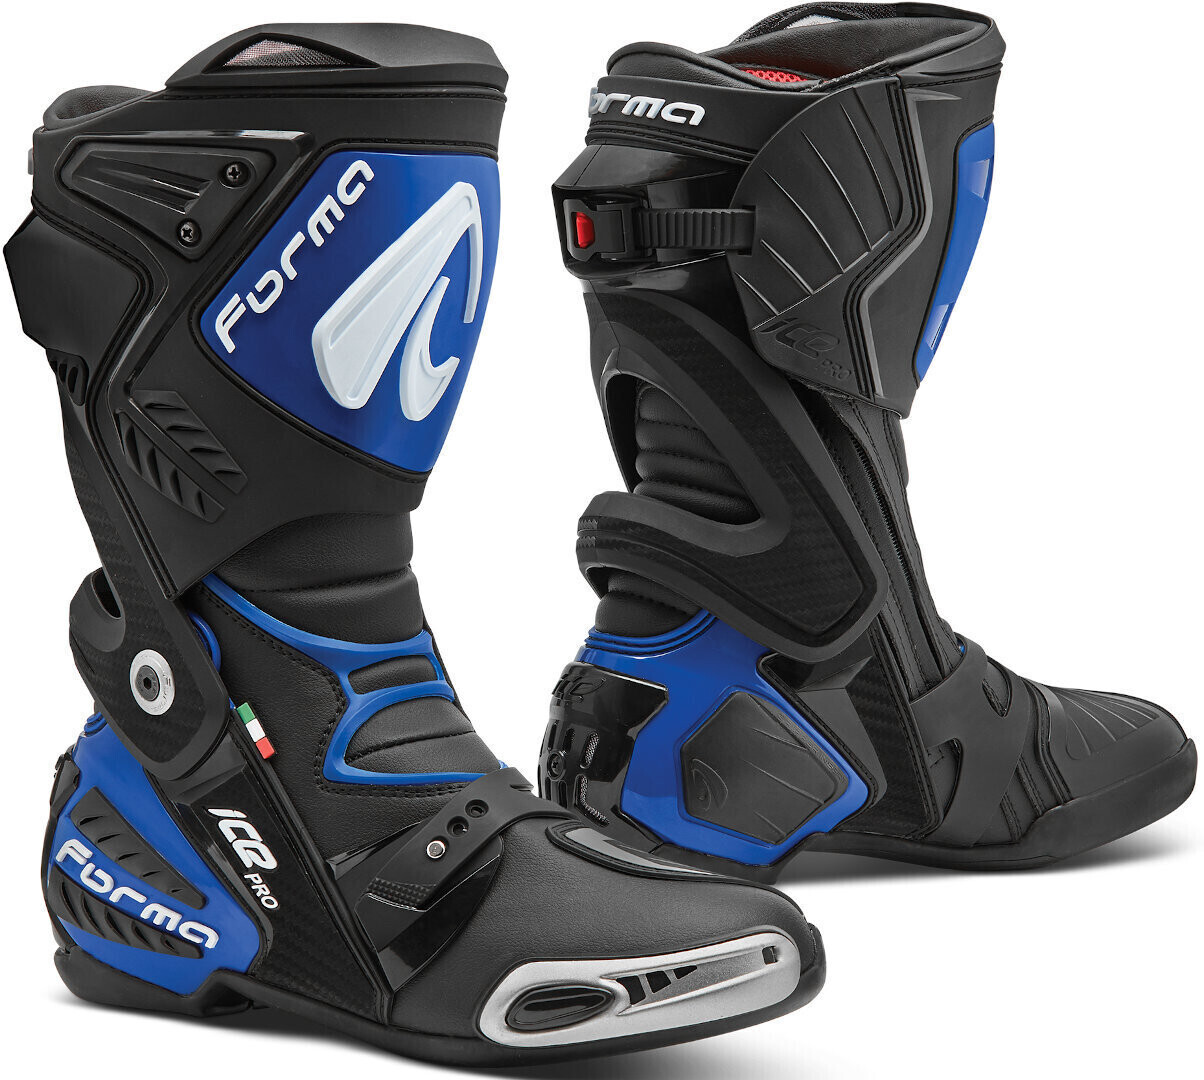 Forma Boots Ice Pro Schwarz blau Ab 199 95 Preisvergleich Bei Idealo de